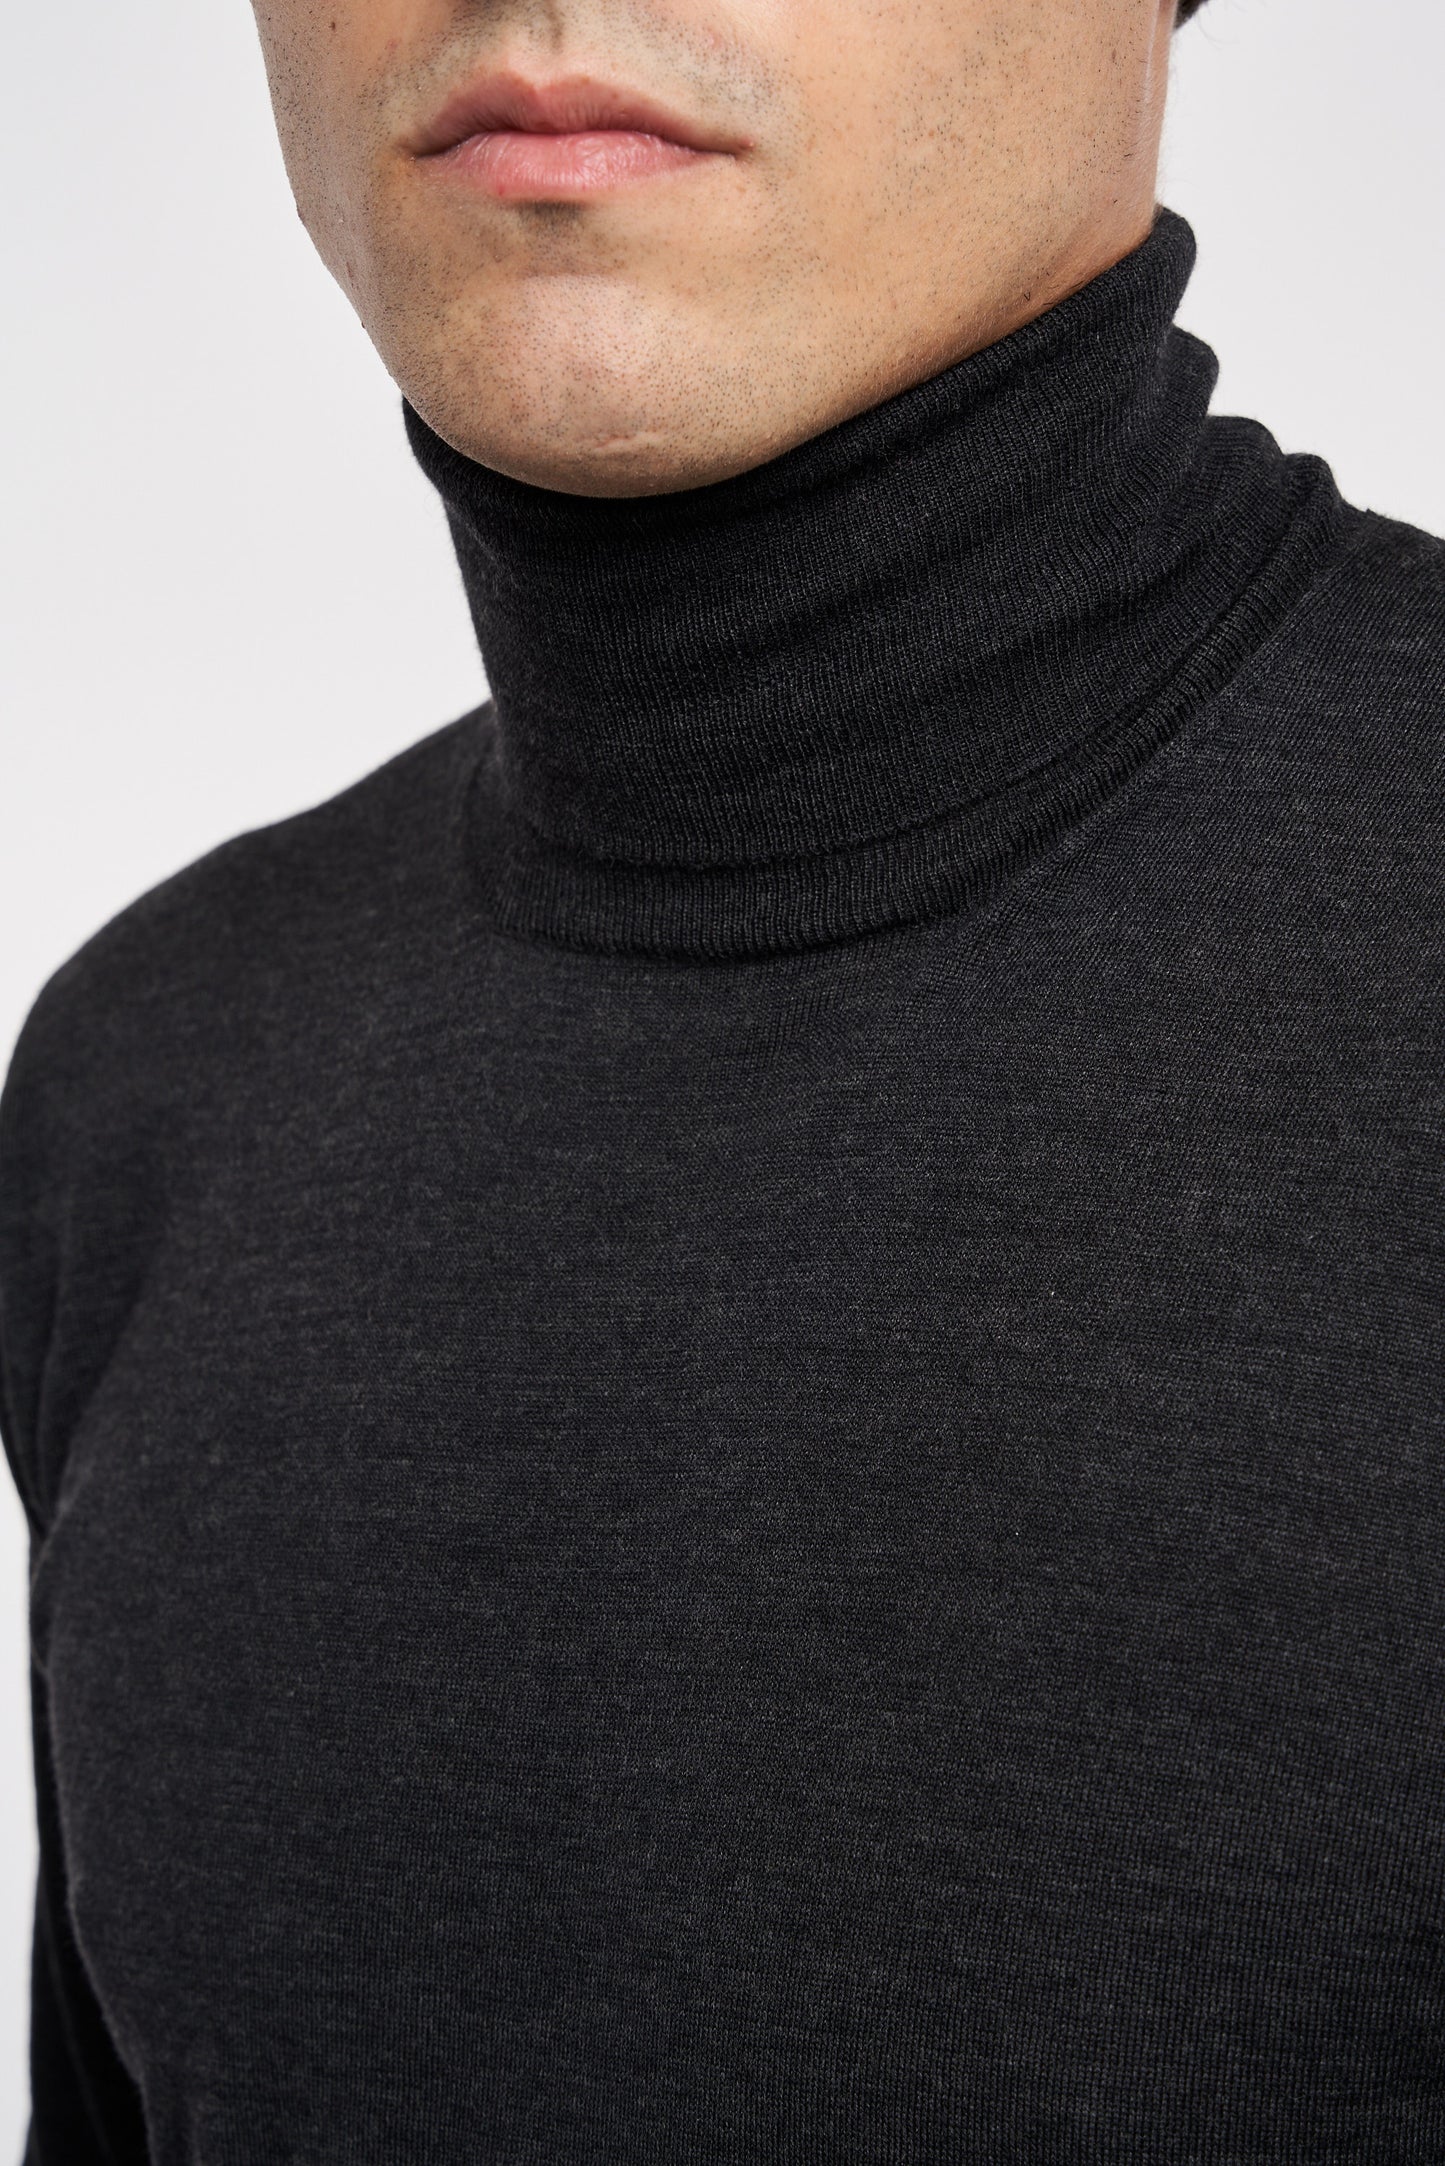  Hindustrie Turtleneck Sweater Royal Merino Black Nero Uomo - 5